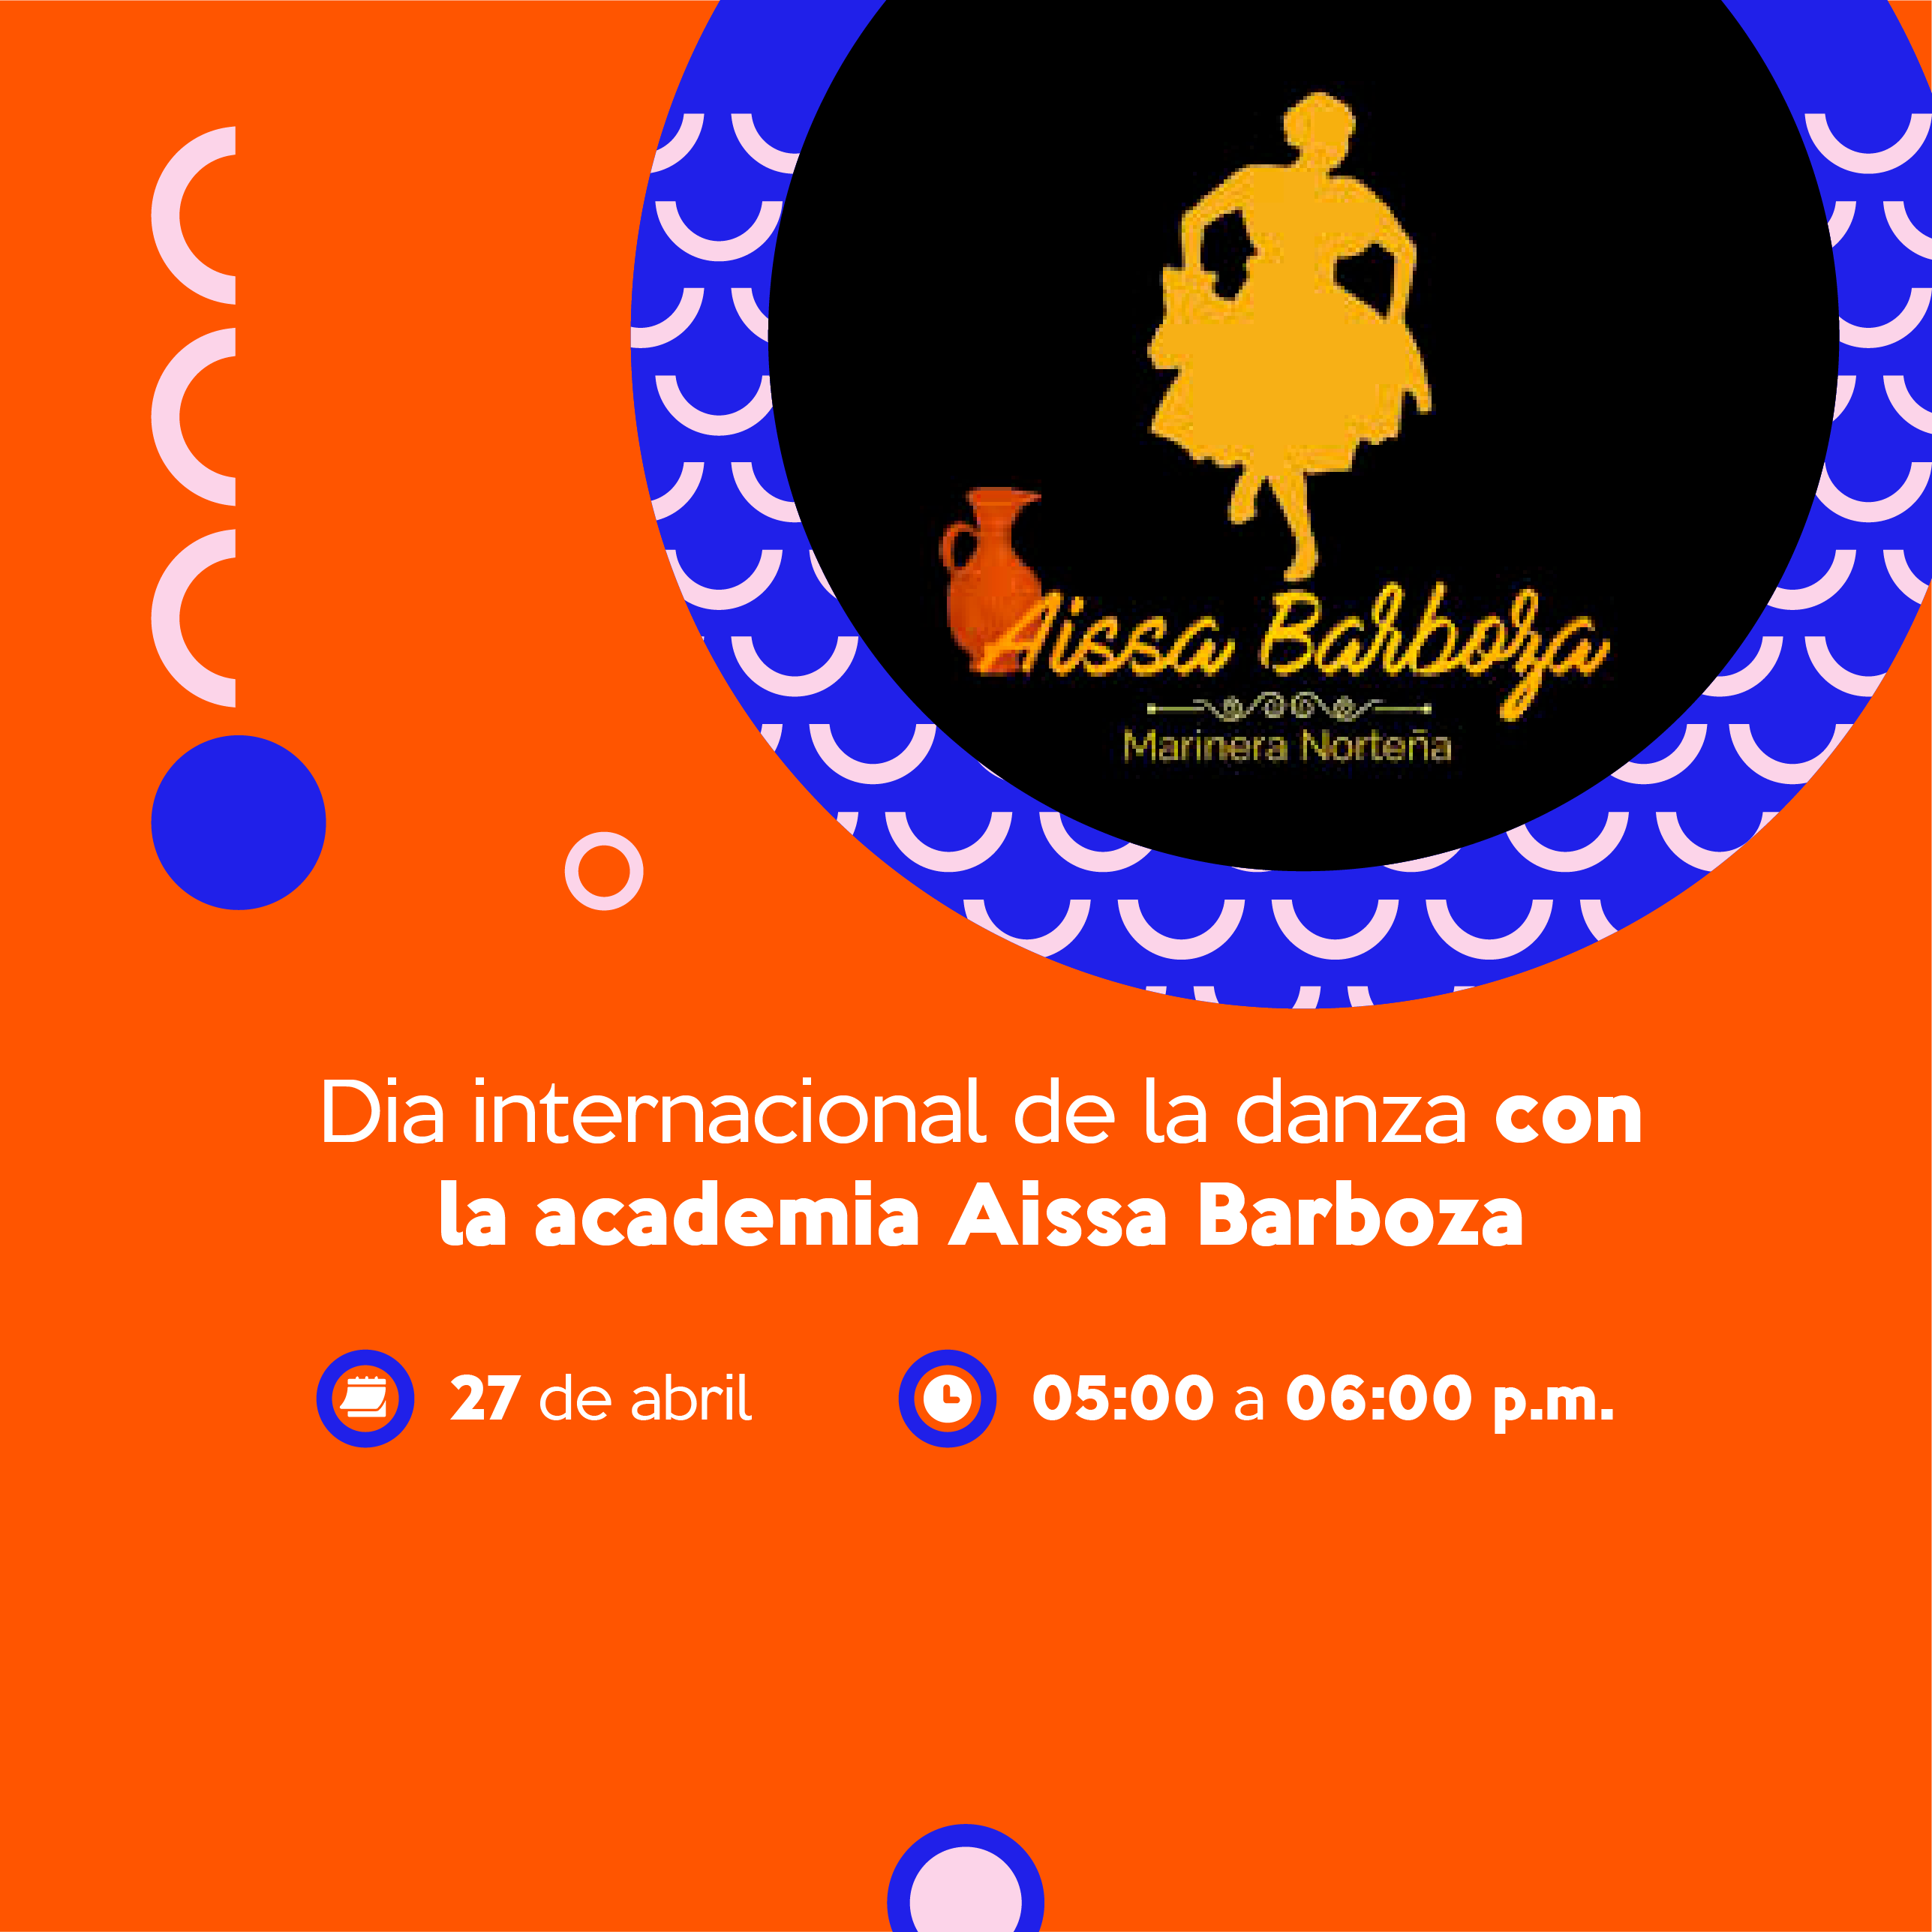 Dia internacional de la danza con la academia Aissa Barboza